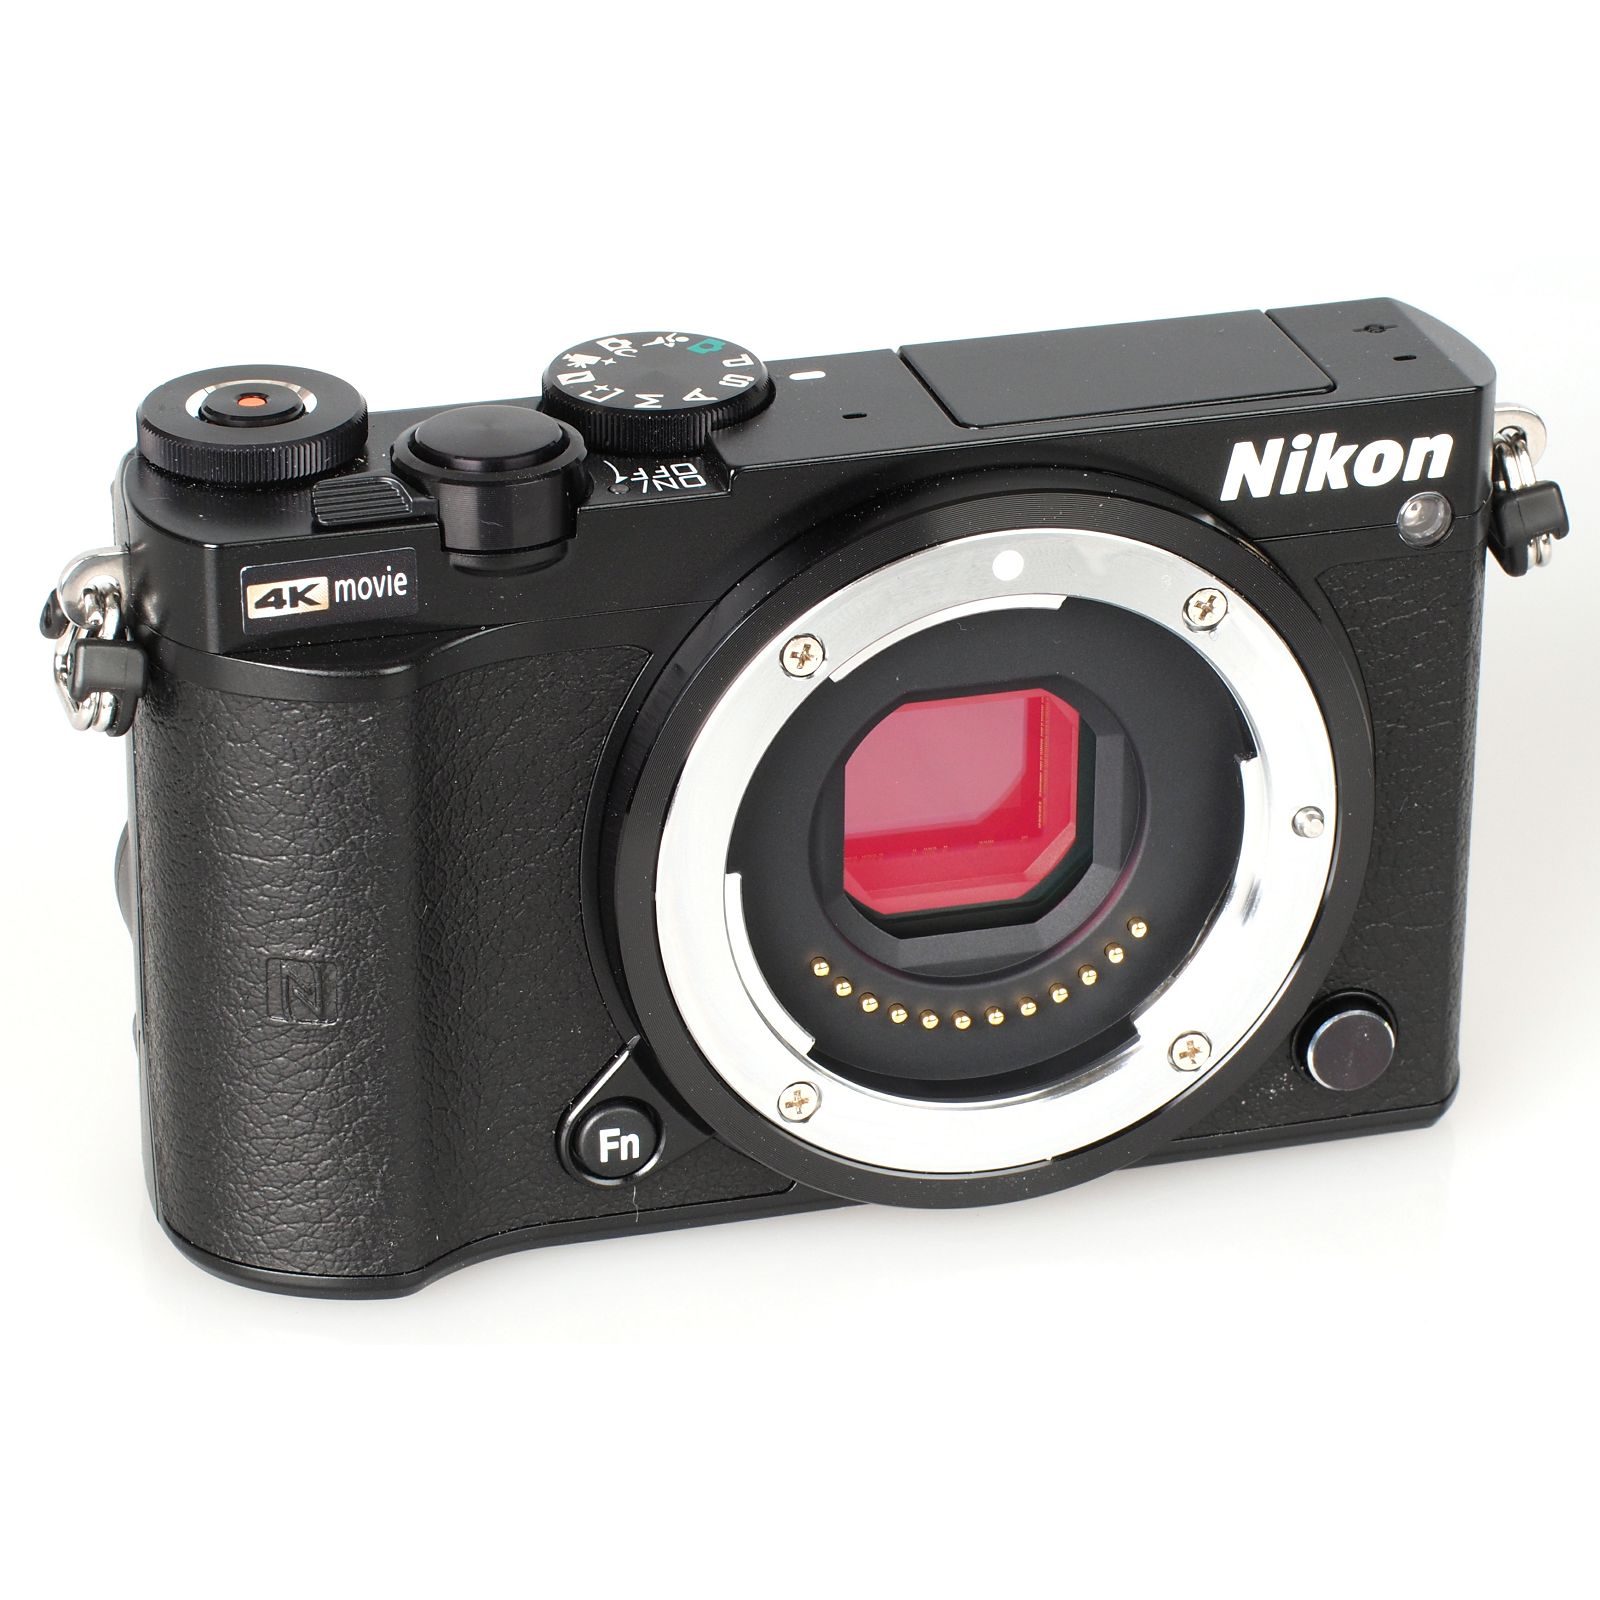 Nikon 1 J5 Body Black crni bezrcalni digitalni fotoaparat tijelo mirrorless digital camera (VVA241AE)